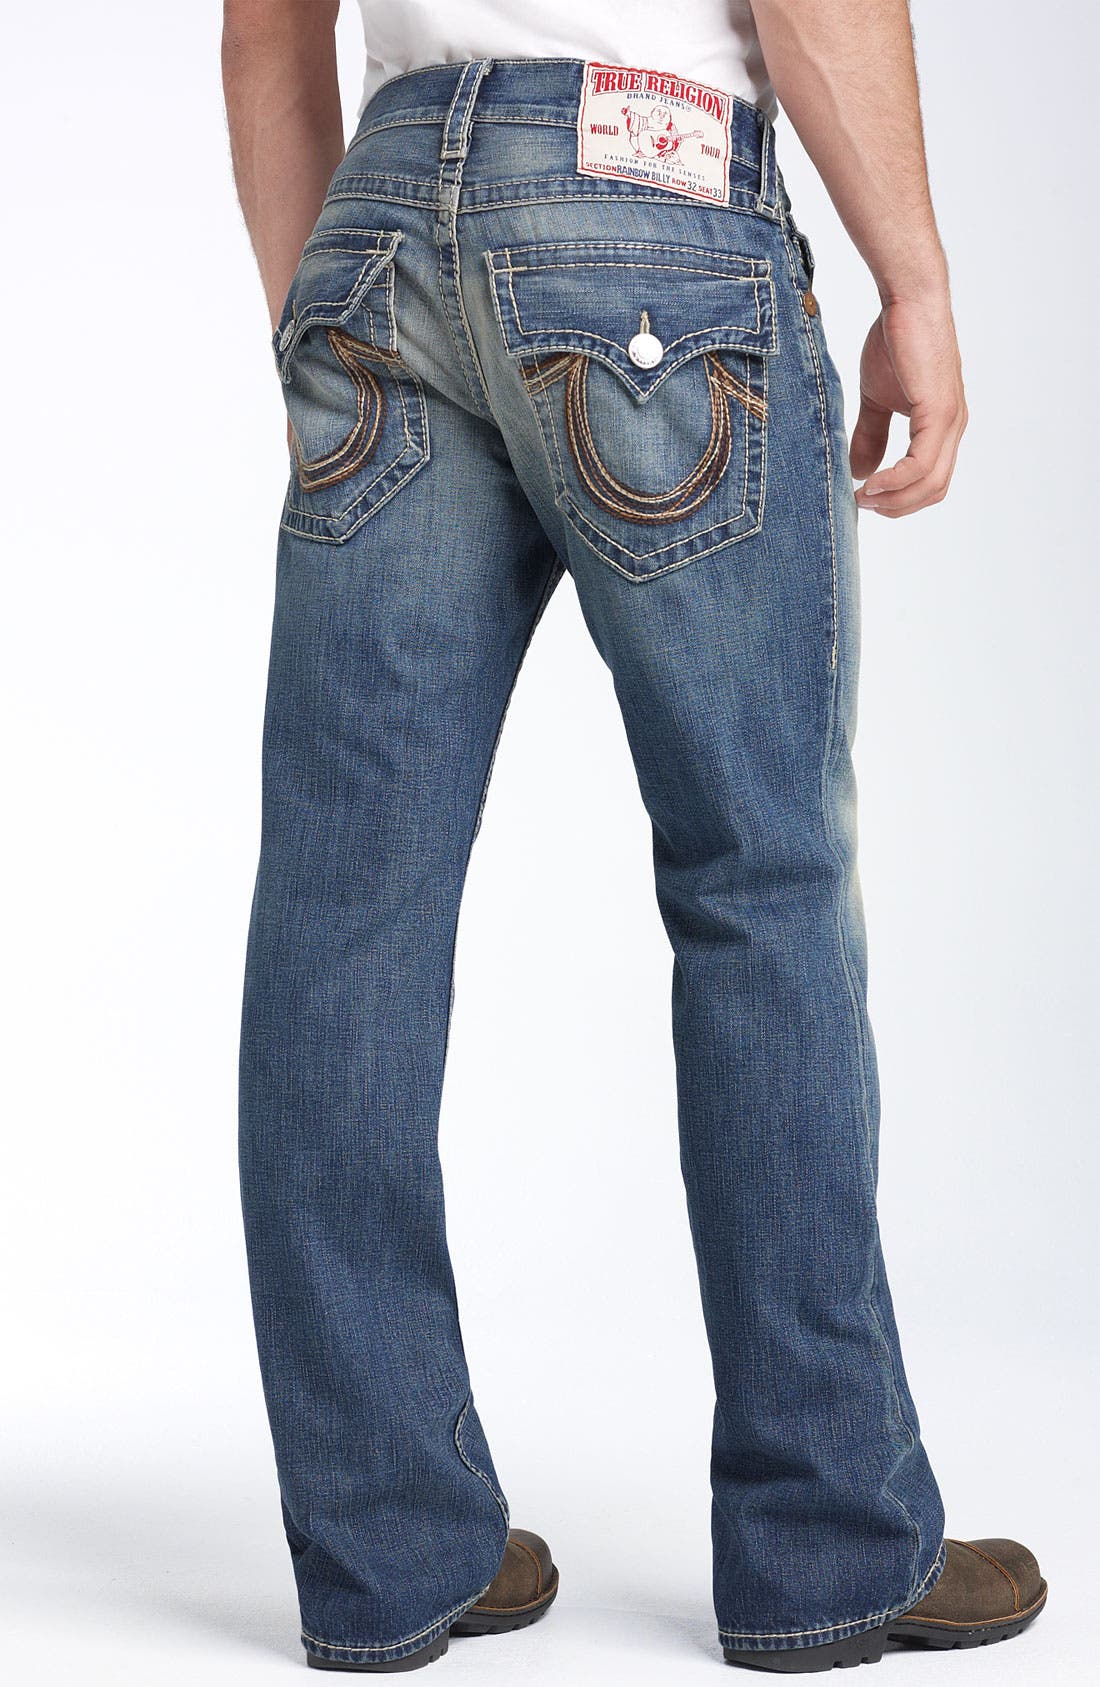 billy true religion jeans